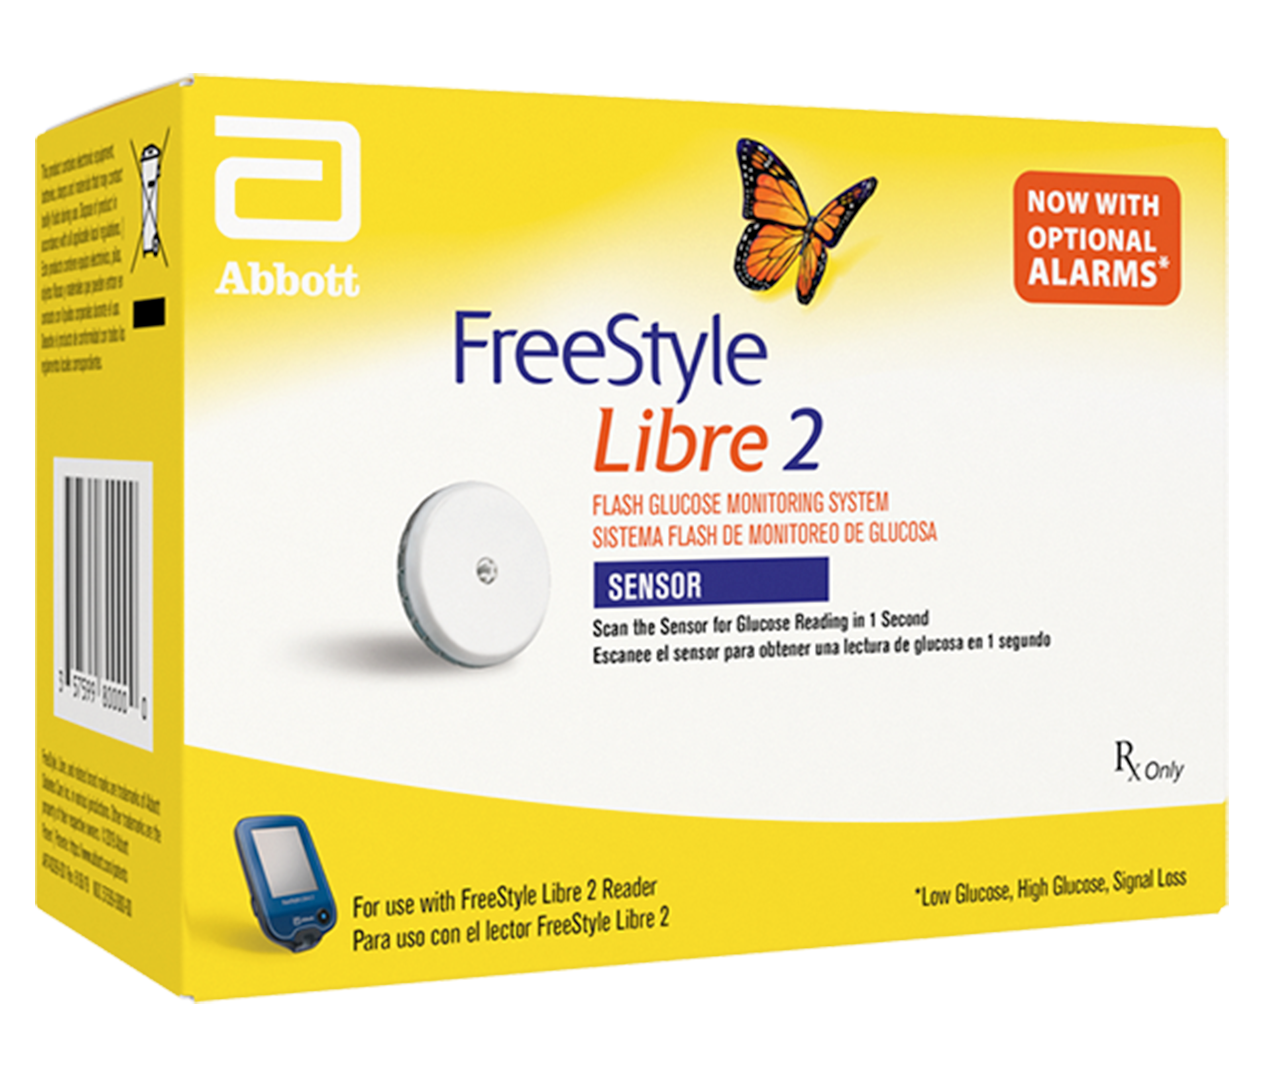 FreeStyle Libre 2 sensors, Abbott